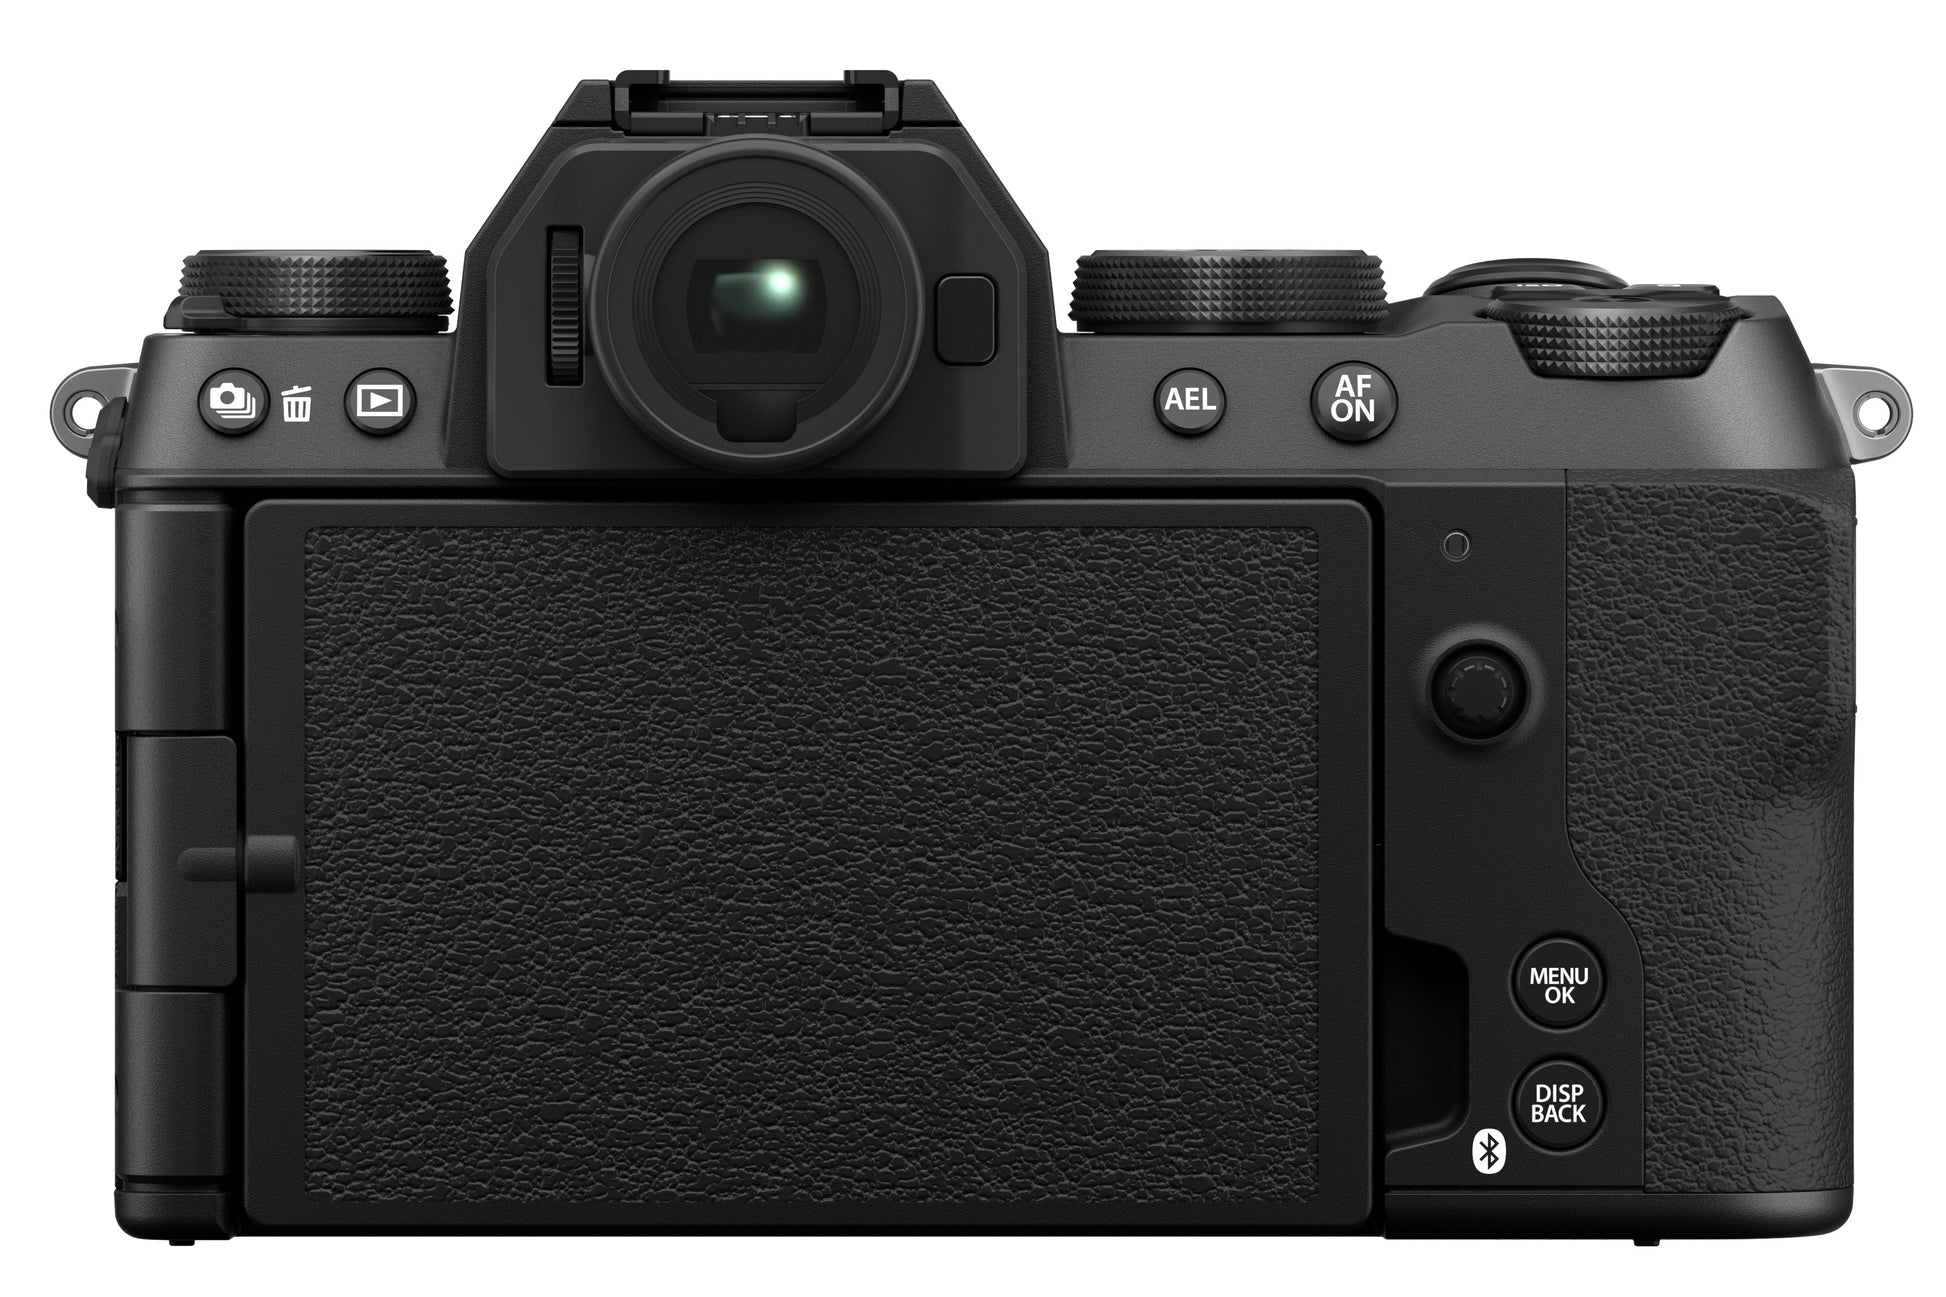 Fujifilm X-S20 Mirrorless Digital Camera - Black - maplin.co.uk